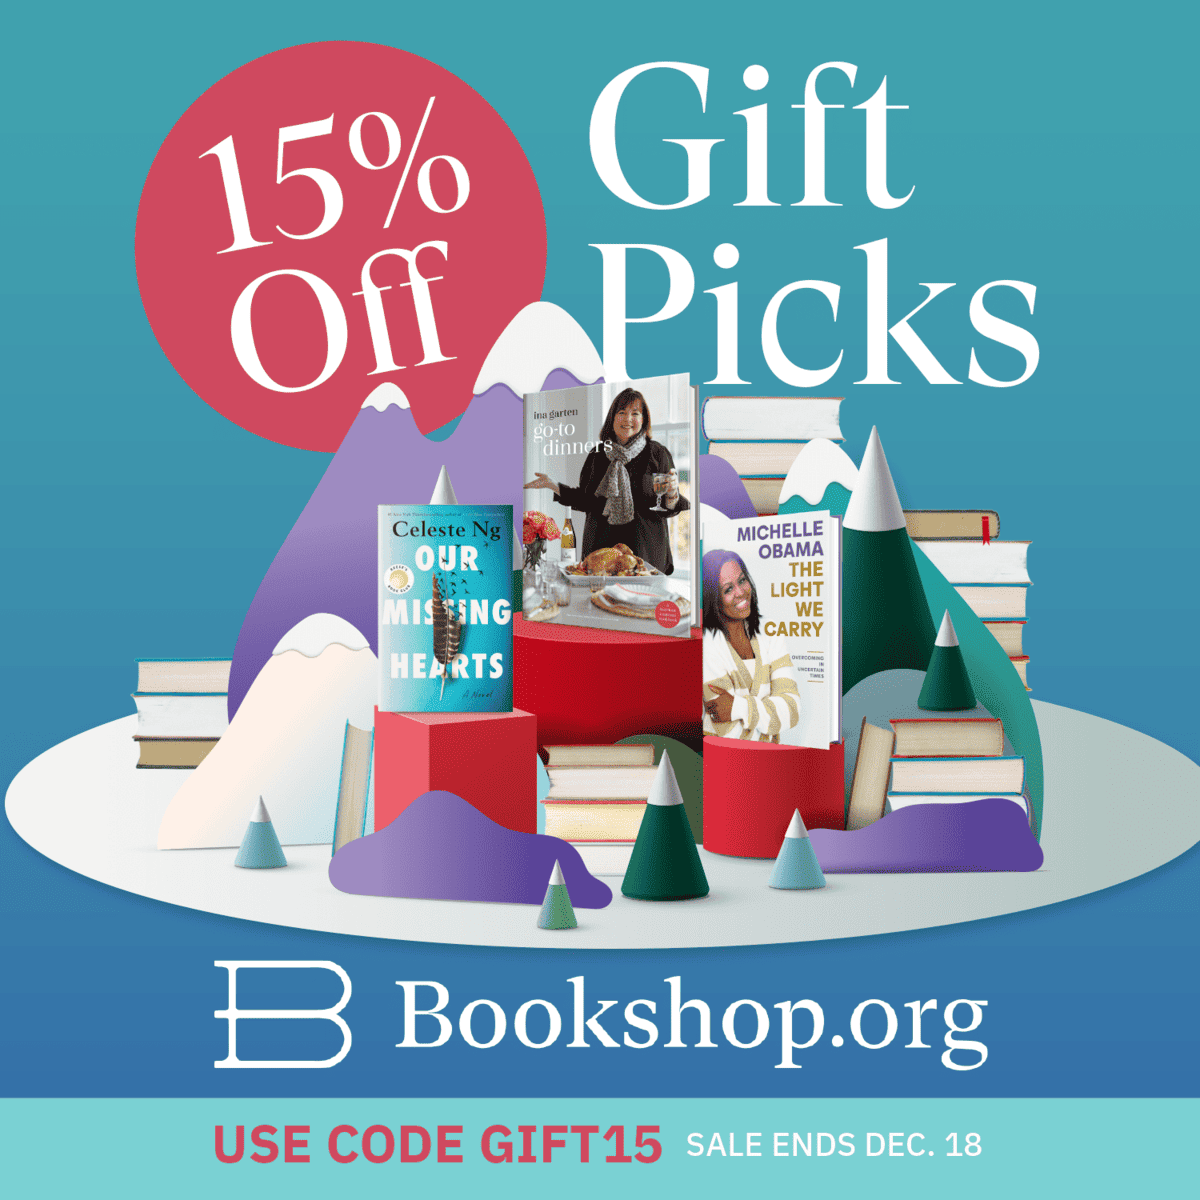 Bookshop.org gift guide